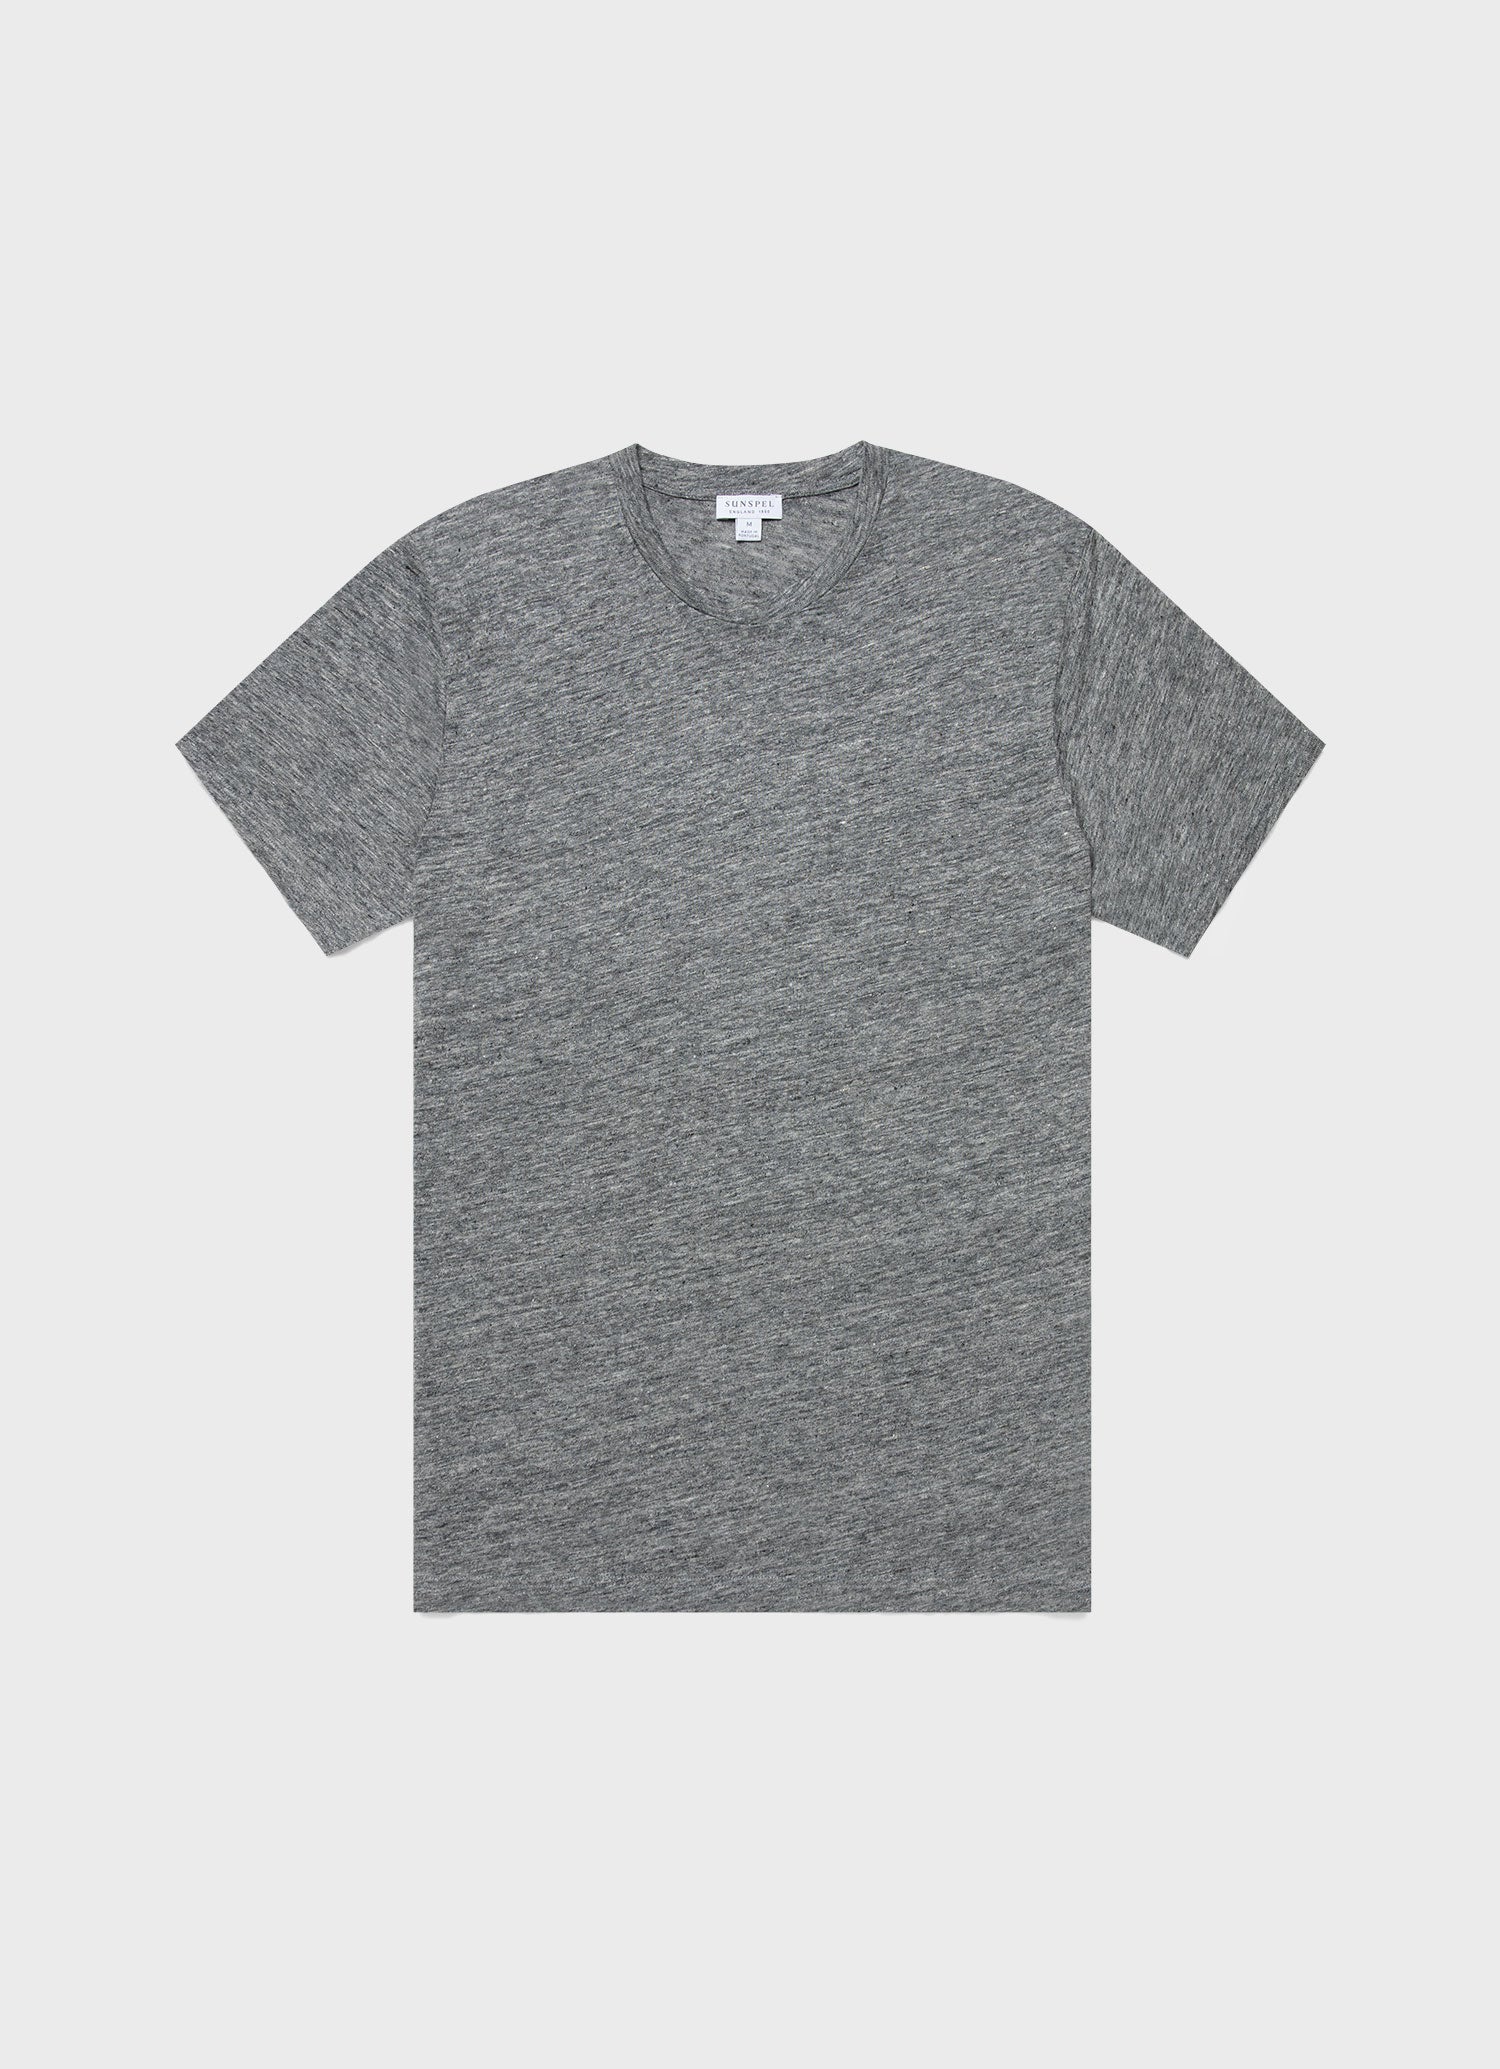 Men's Linen T-shirt in Mid Grey Melange | Sunspel